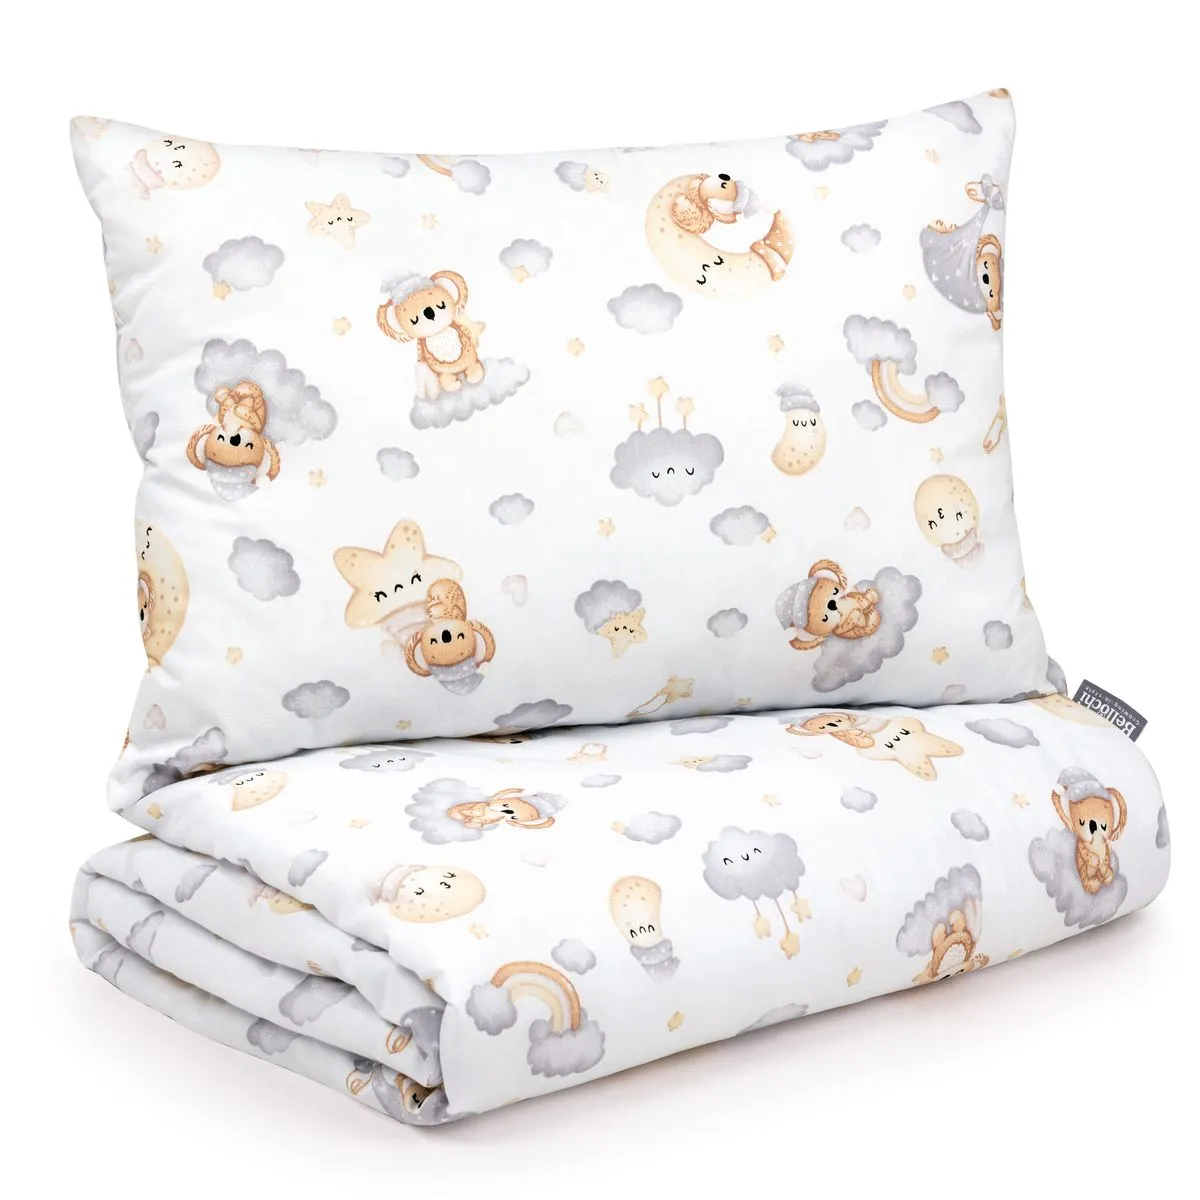 Cotton Toddler bedding 2 pc set, kid duvet cover 135×100 cm and pillowcase 60×40 cm star bear